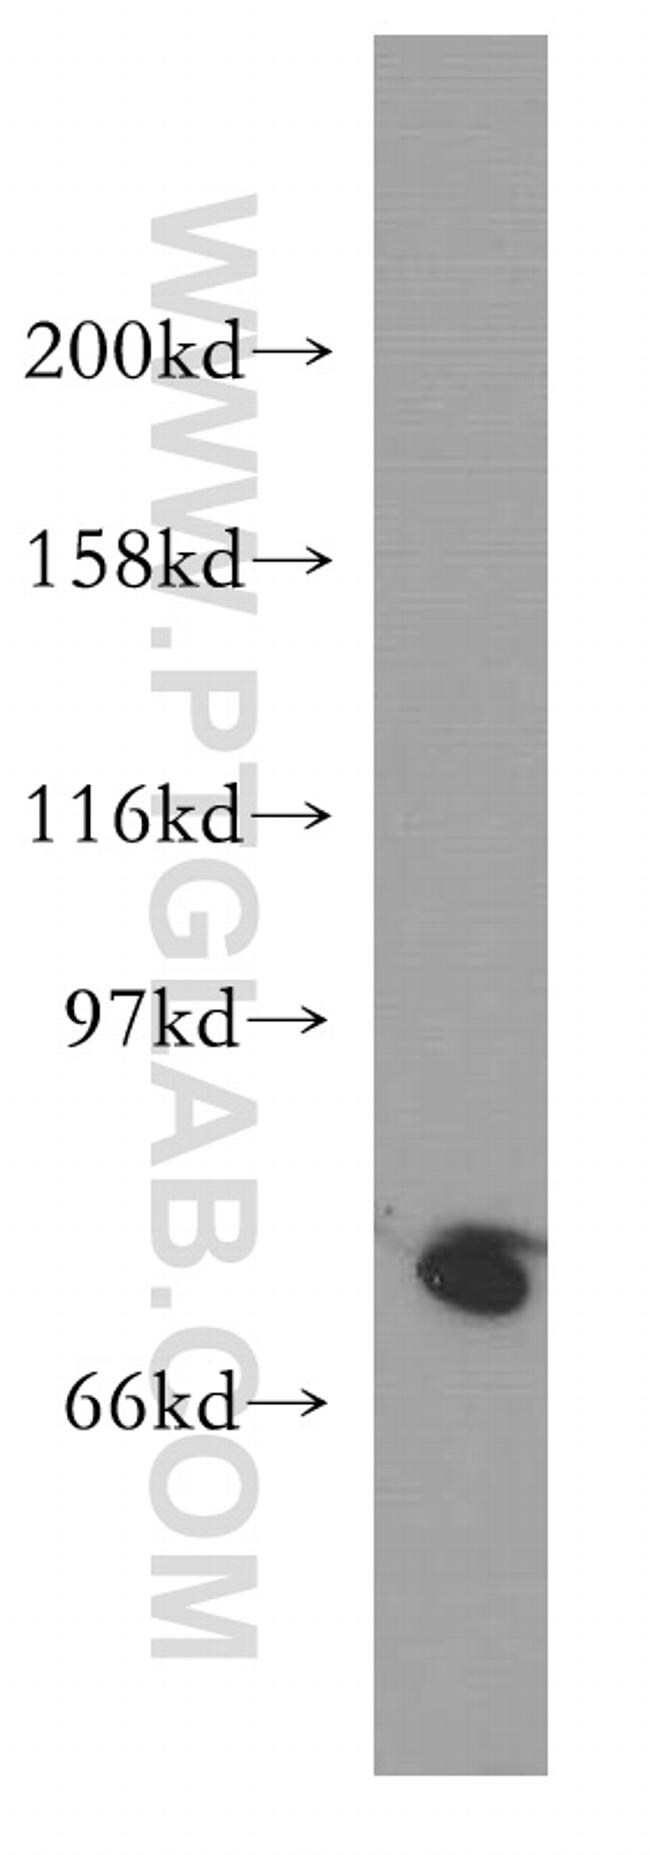 SH2D3C Antibody in Western Blot (WB)